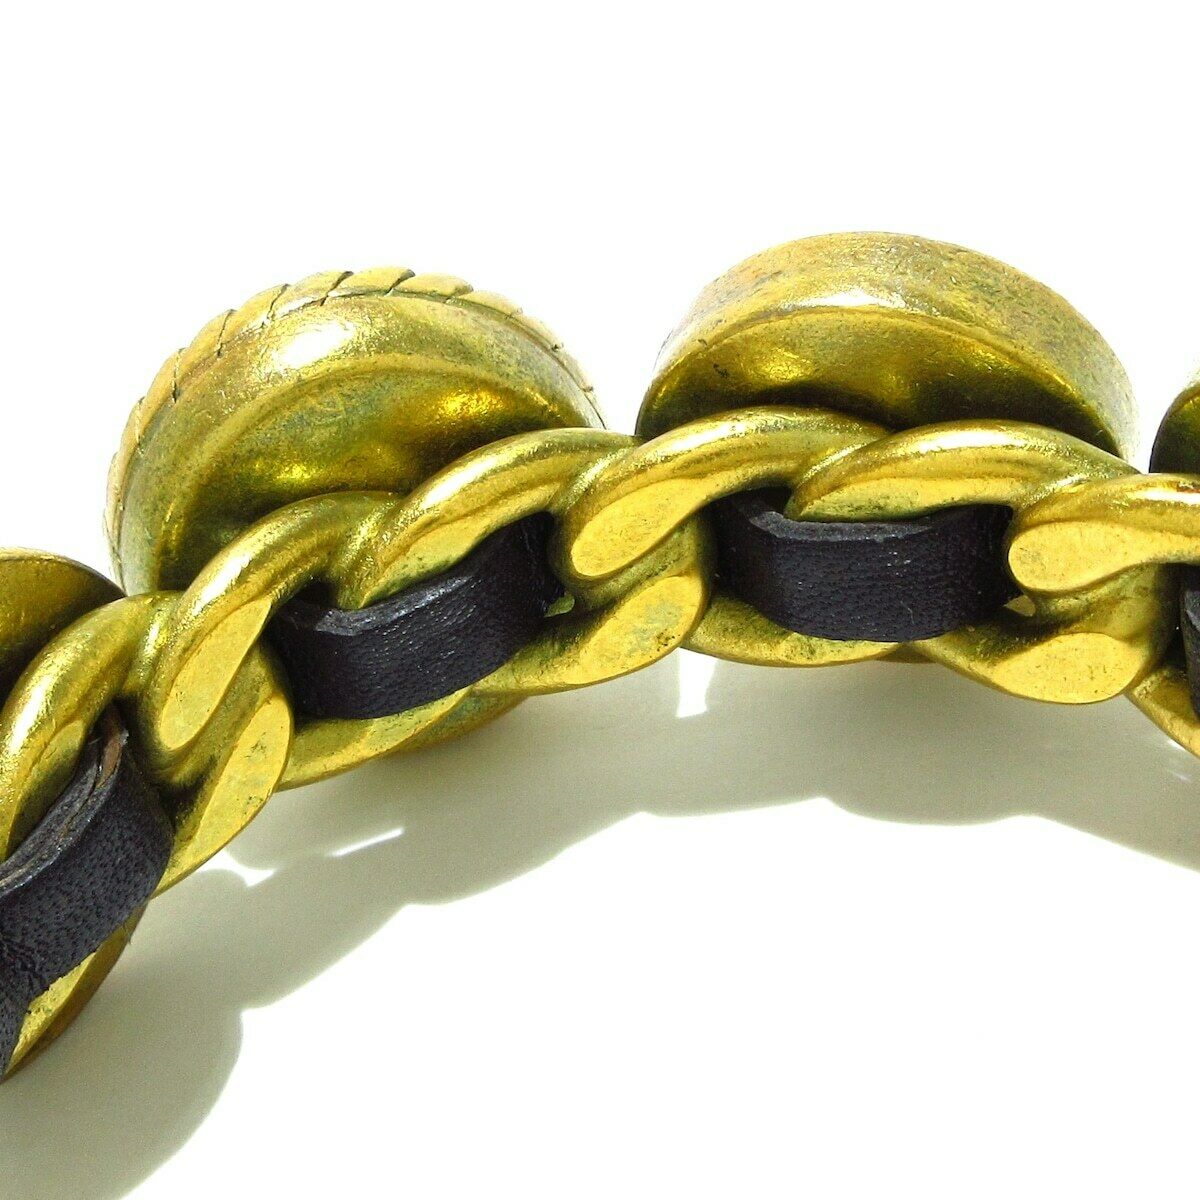 Vintage Chanel cuff bracelet bangle 7 icon charm black round